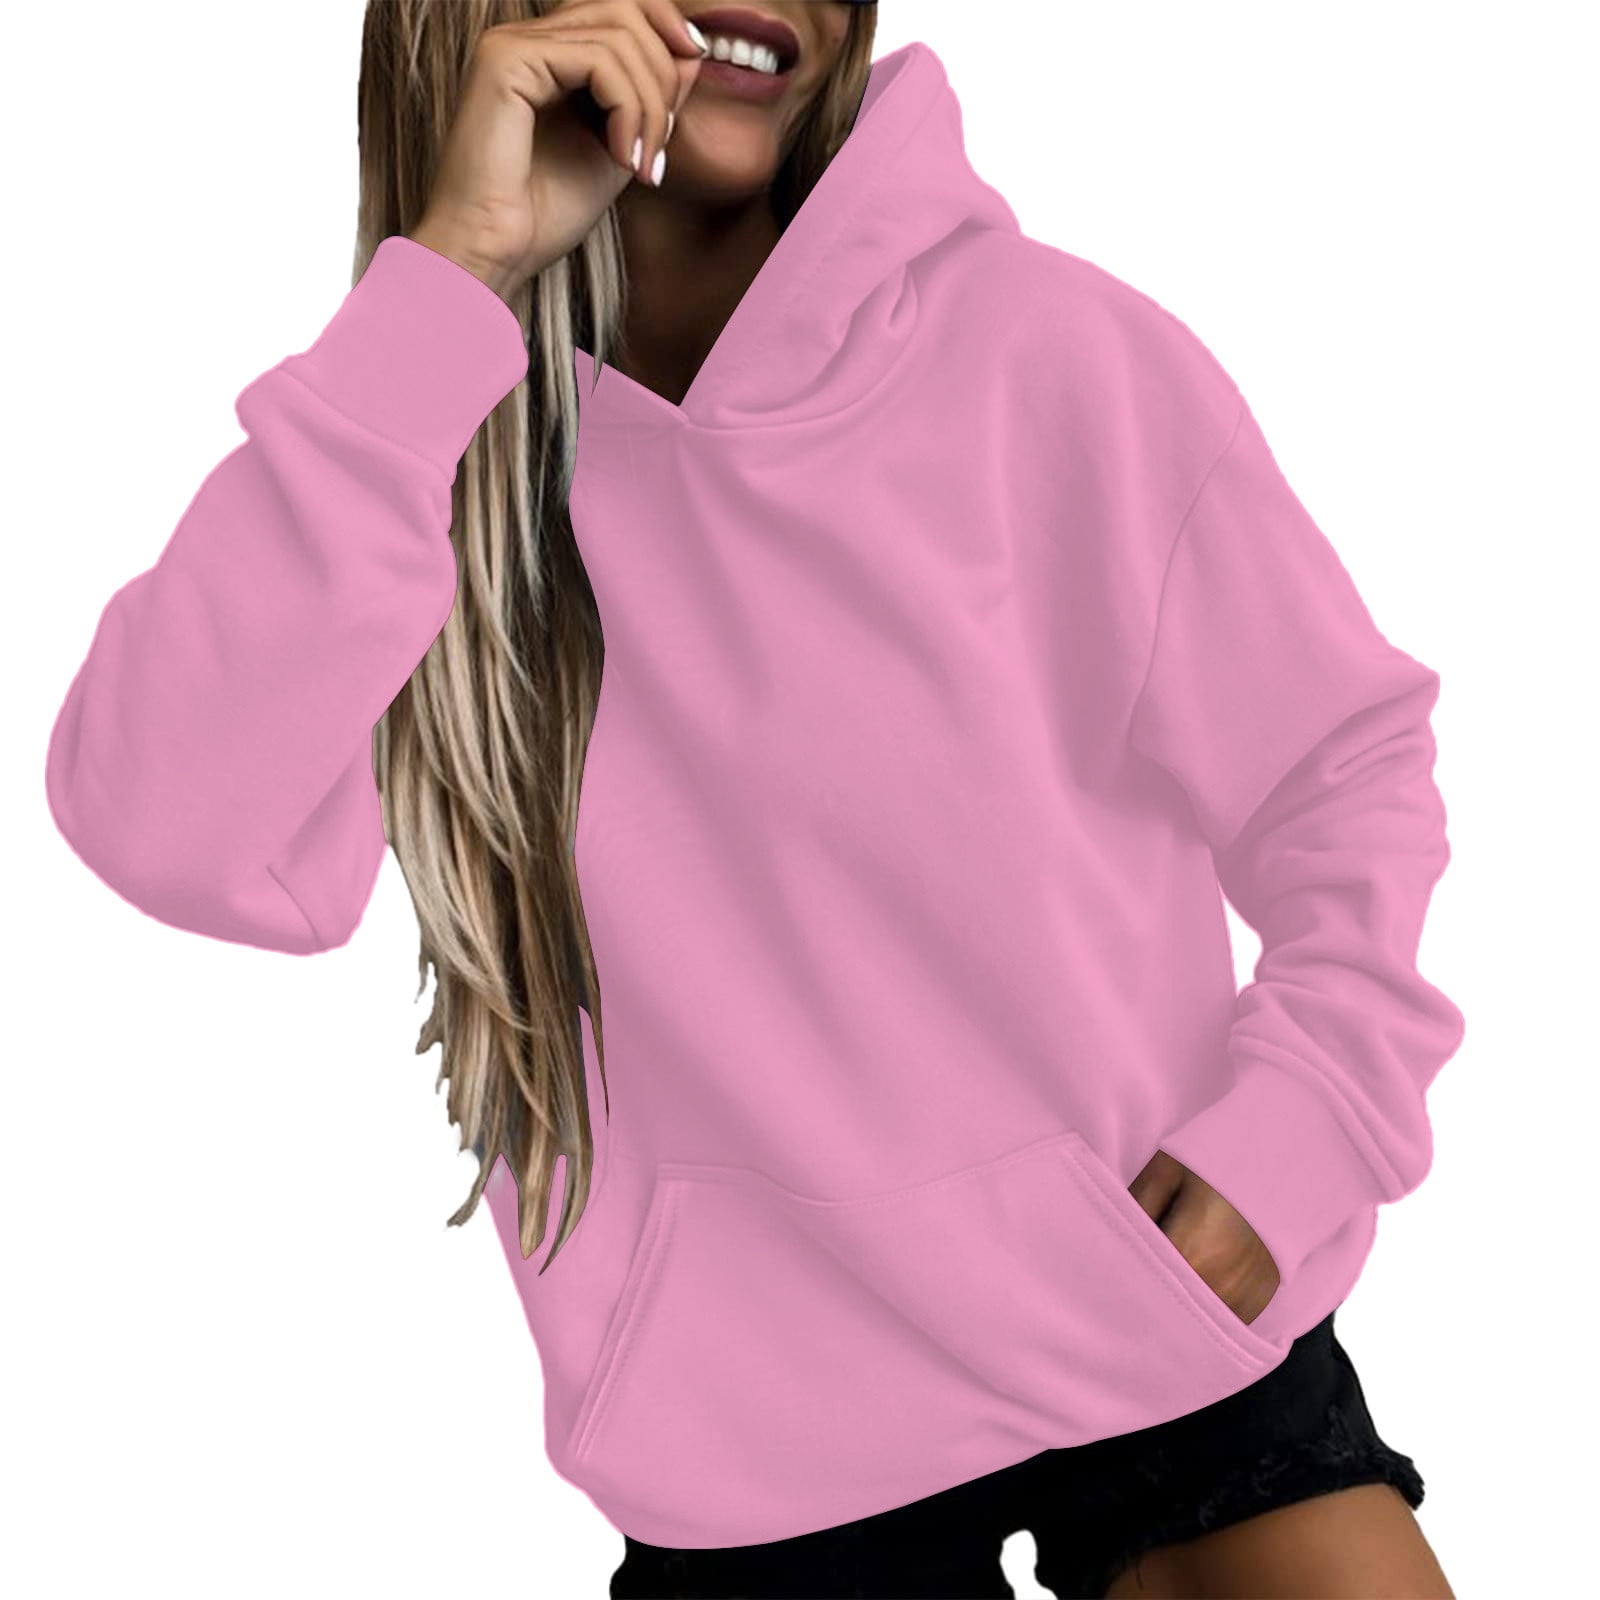 Yyeselk Hoodies for Women Solid Color Tops Pullover Hooded